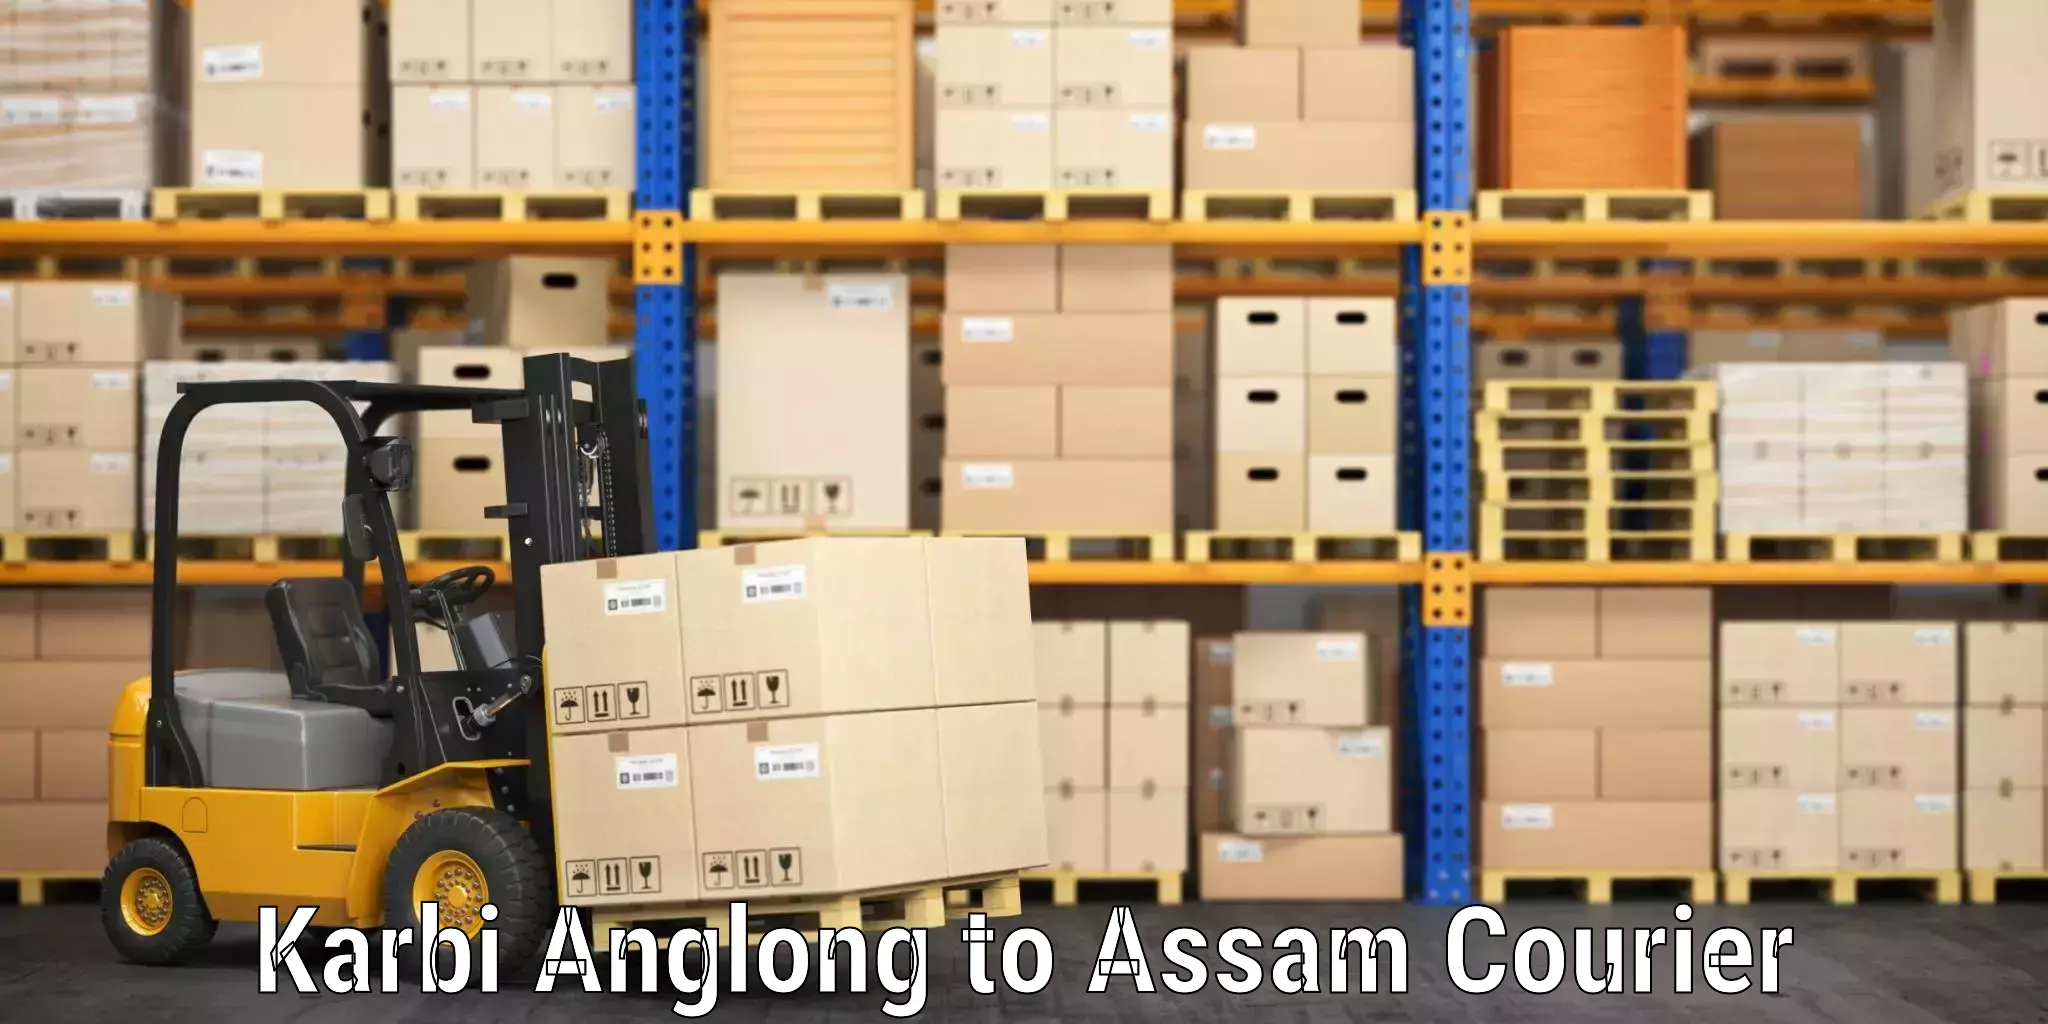 Luggage shipment processing Karbi Anglong to Baksha Bodoland